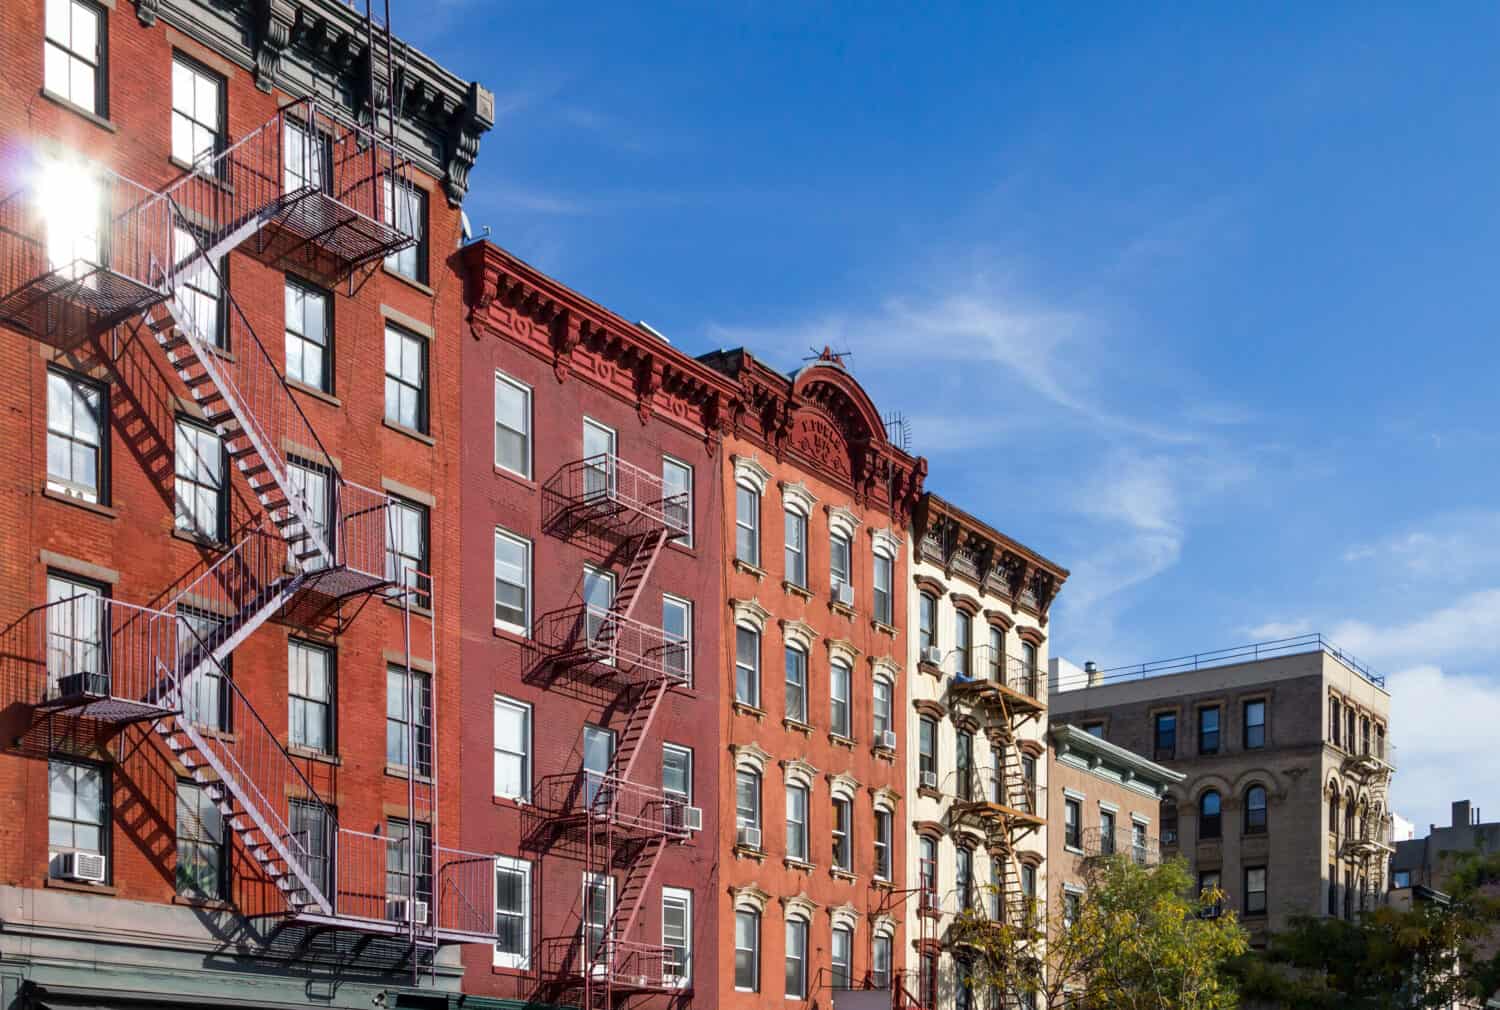 Historic Apartment Buildings along Bleecker Street in the Greenwich Village neighborhood of Manhattan, New York City